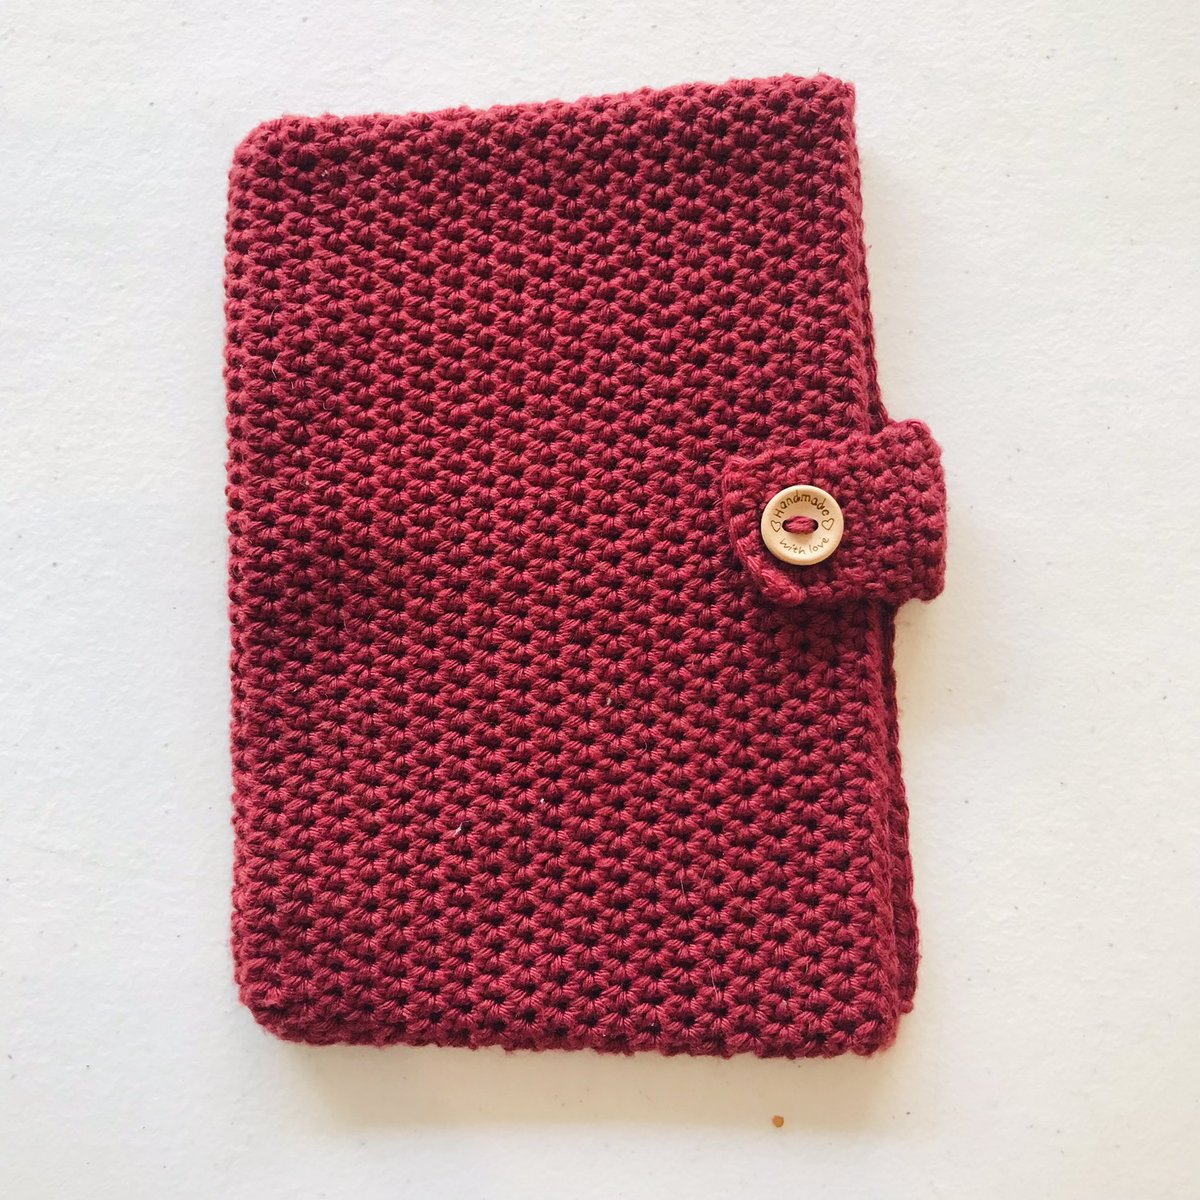 Crochet book/bible cover 💙

#crochet #SmallBusiness #handmadegifts #ilovecrochet #supportsmallbusiness